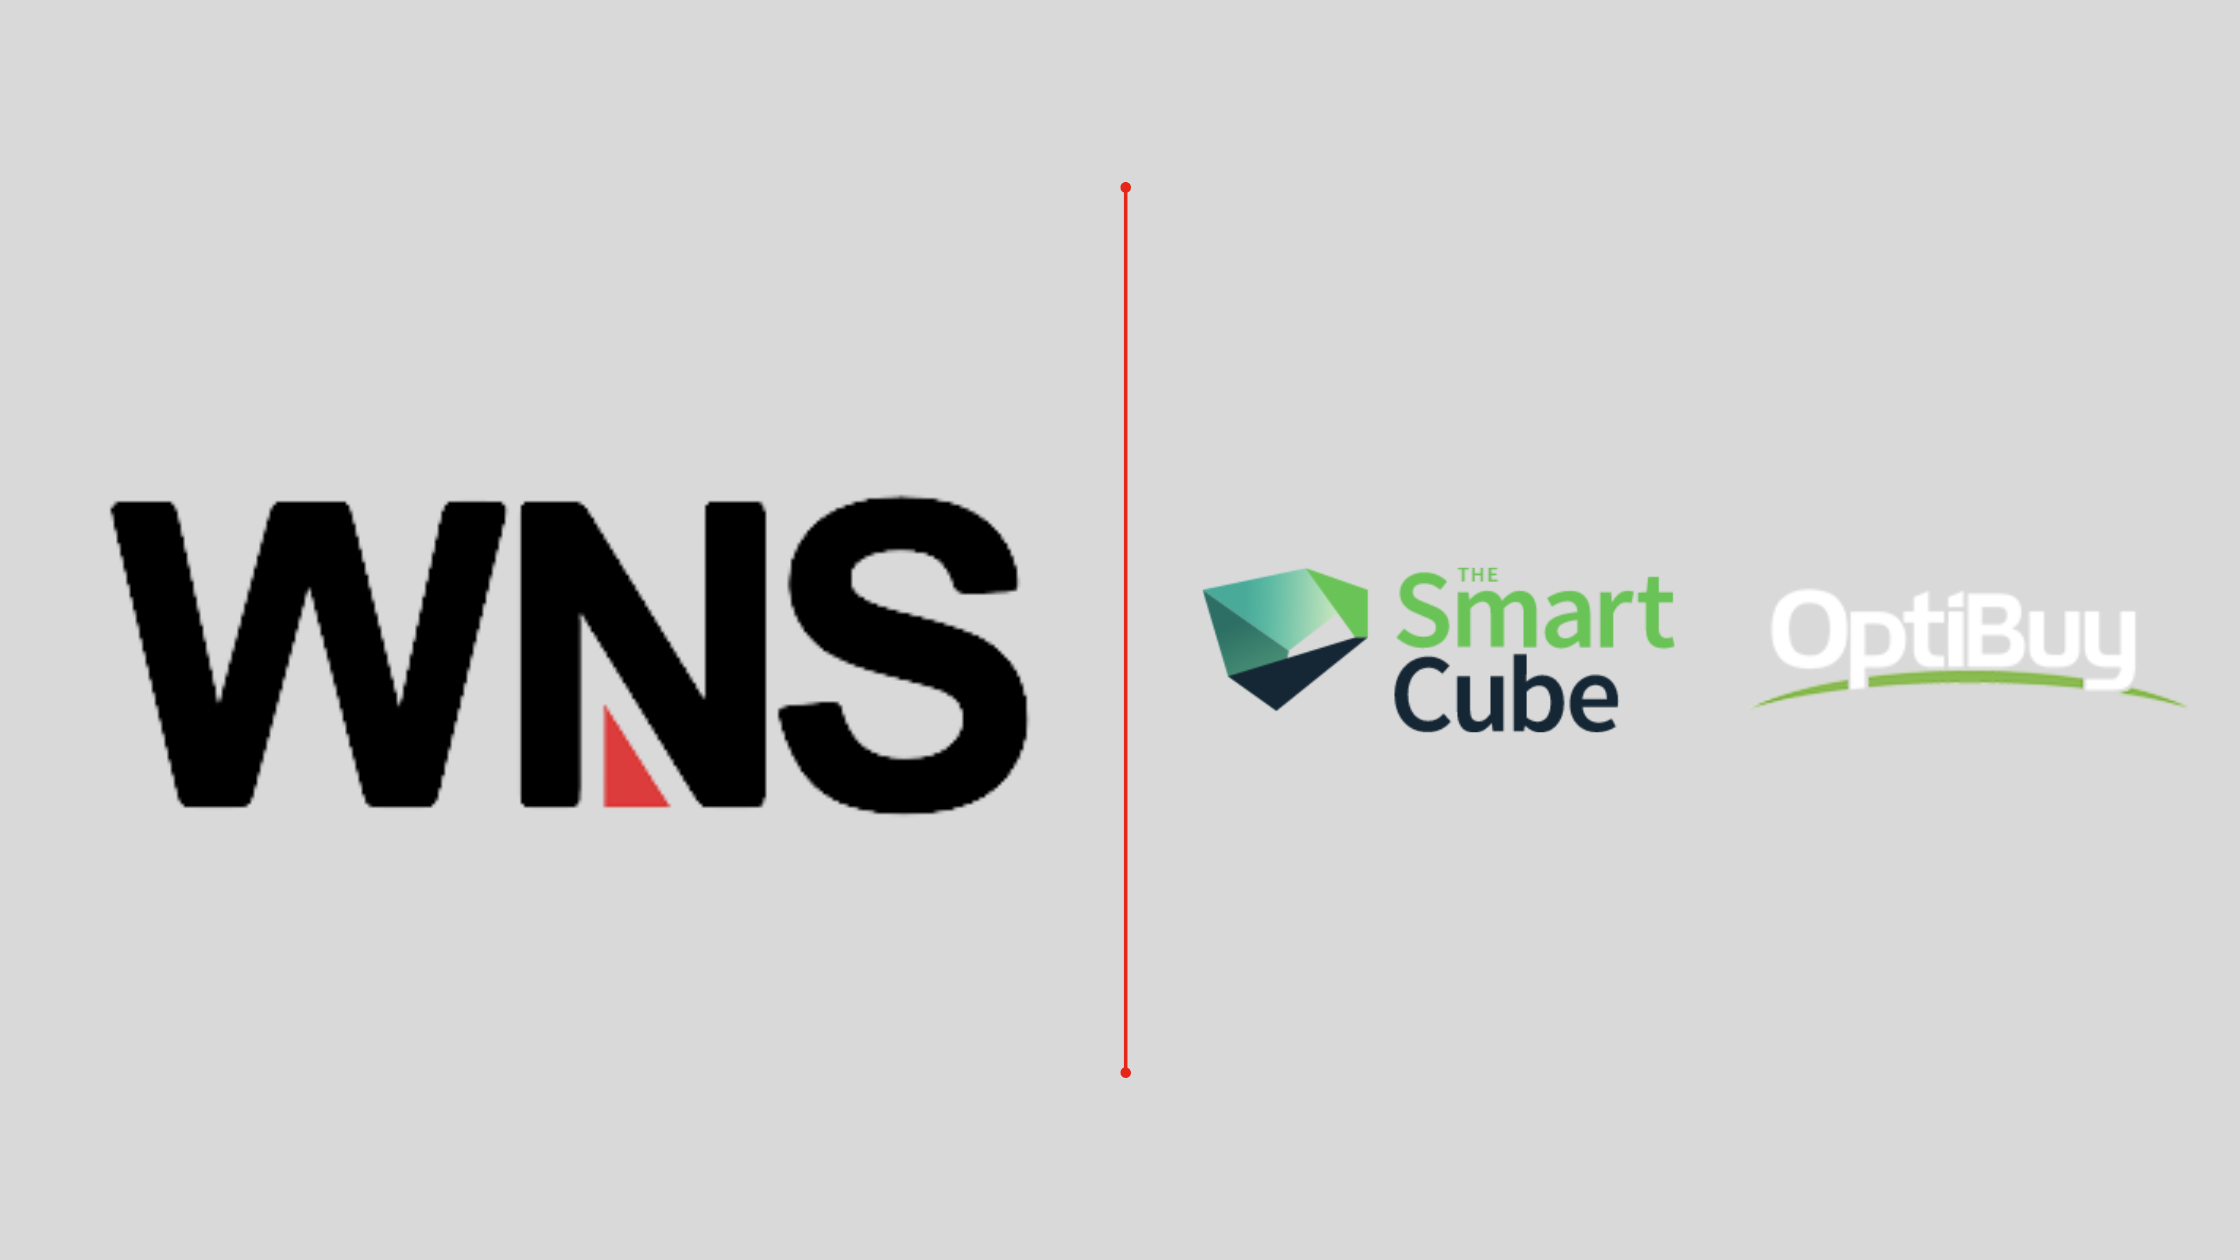 WNS Acquires The Smart Cube, OptiBuy to Strengthen Procurement & Analytics Capabilities